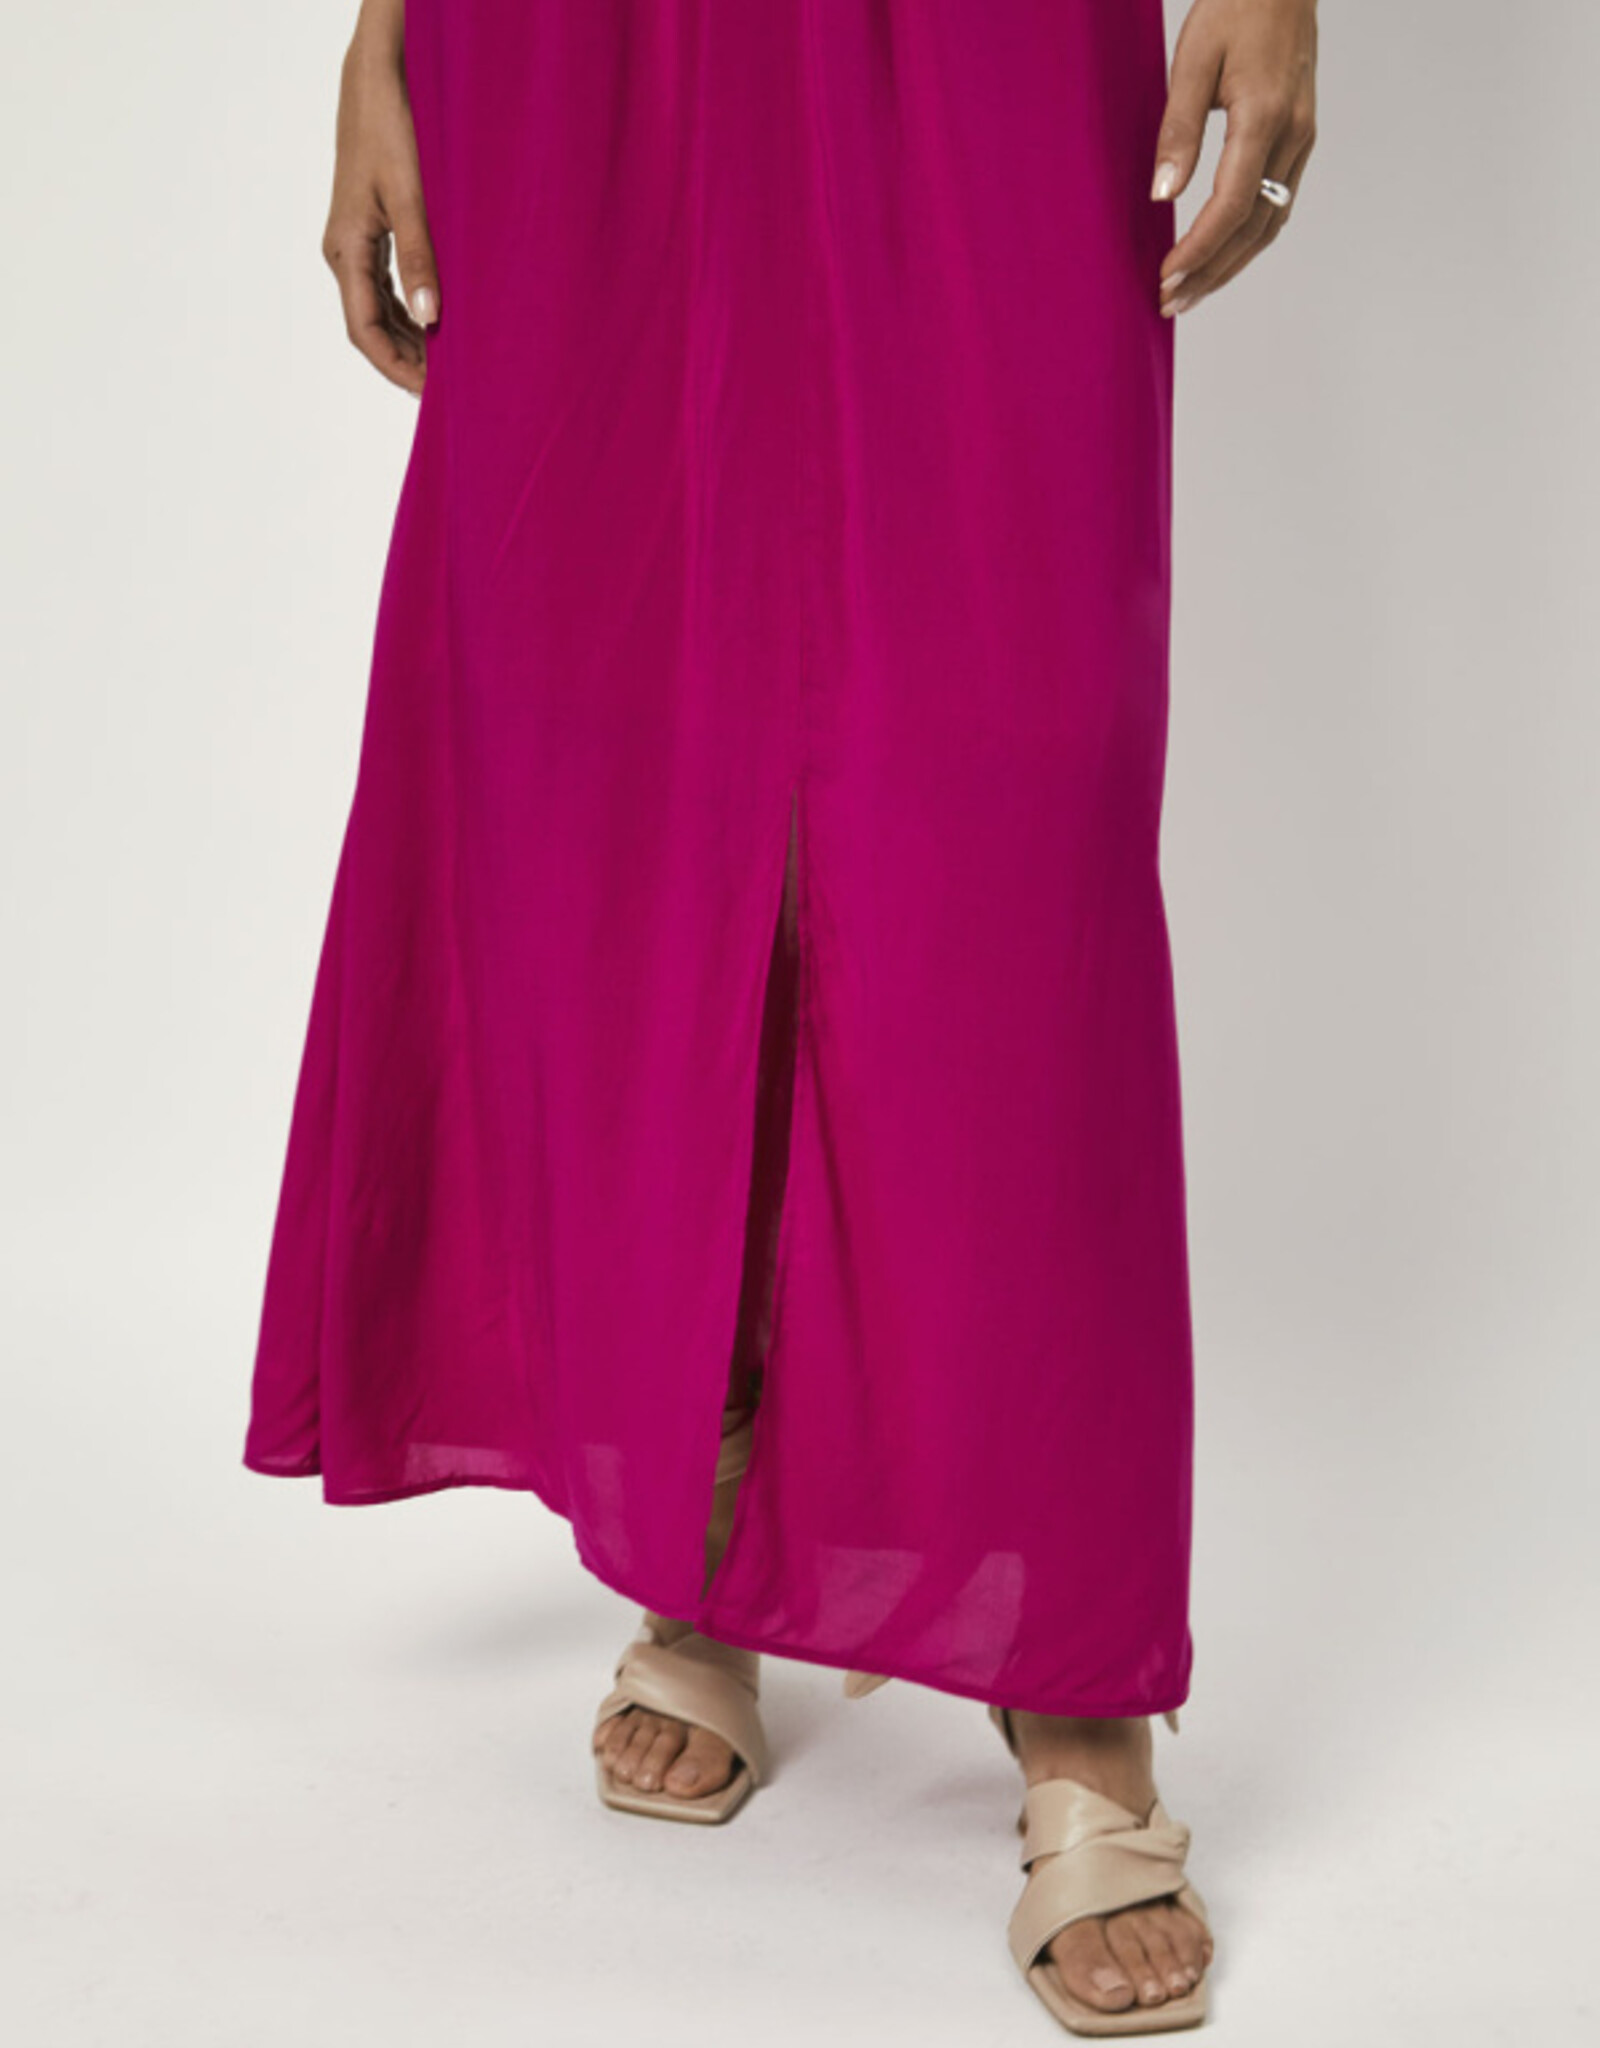 Dante 6 Imperia Bohemian Maxi Dress Hibiscus Pink